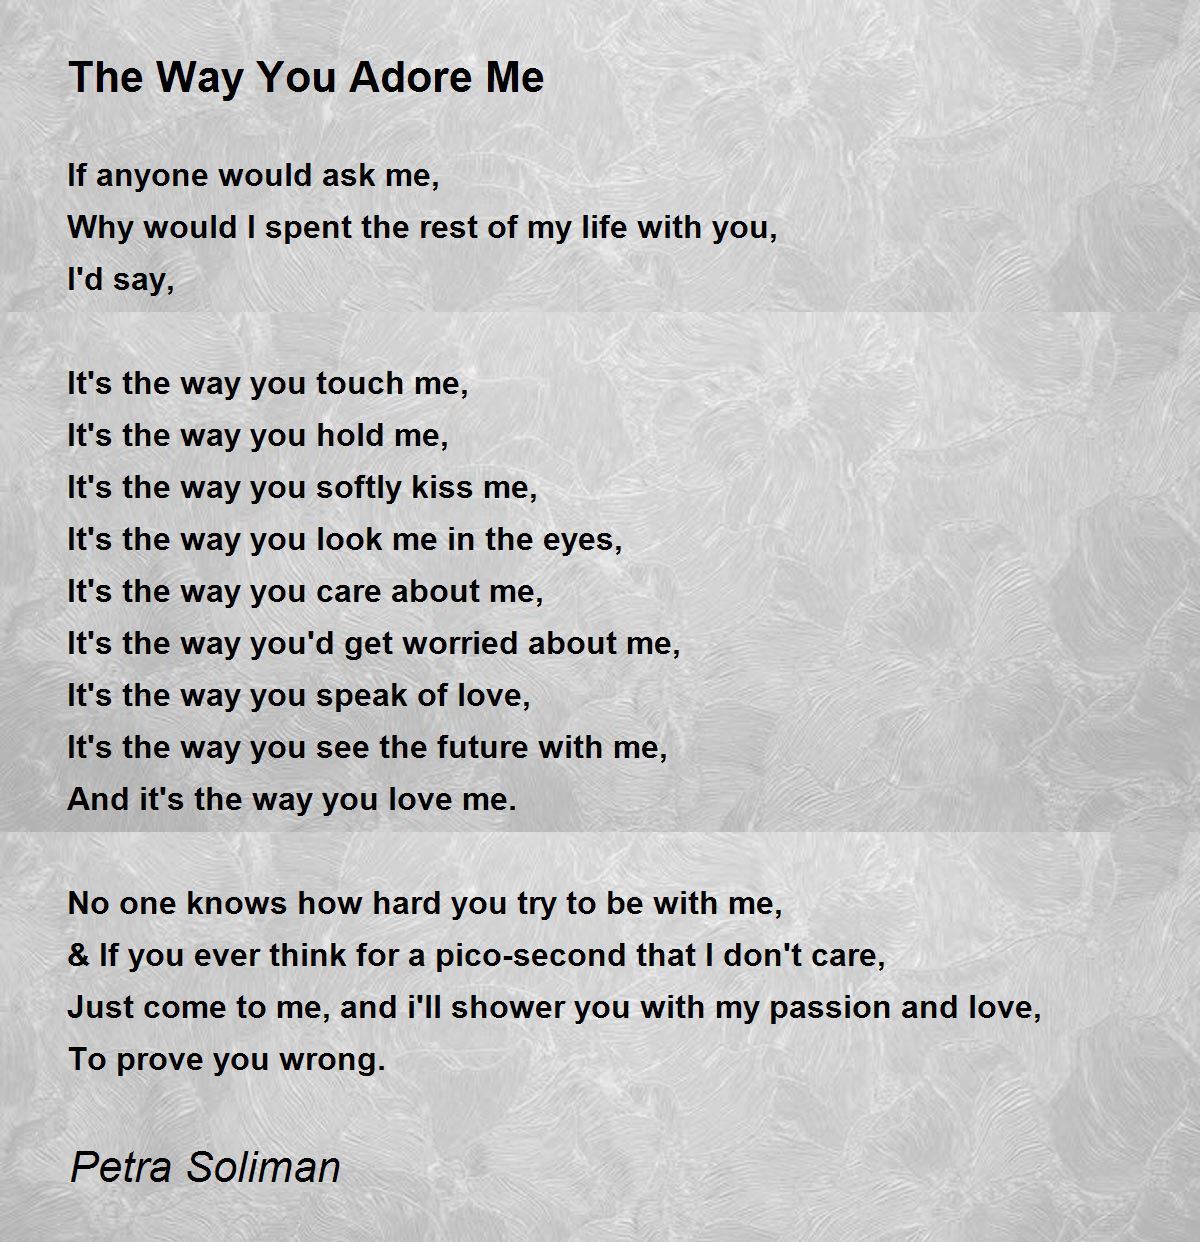 The Way You Adore Me - The Way You Adore Me Poem by Petra Soliman